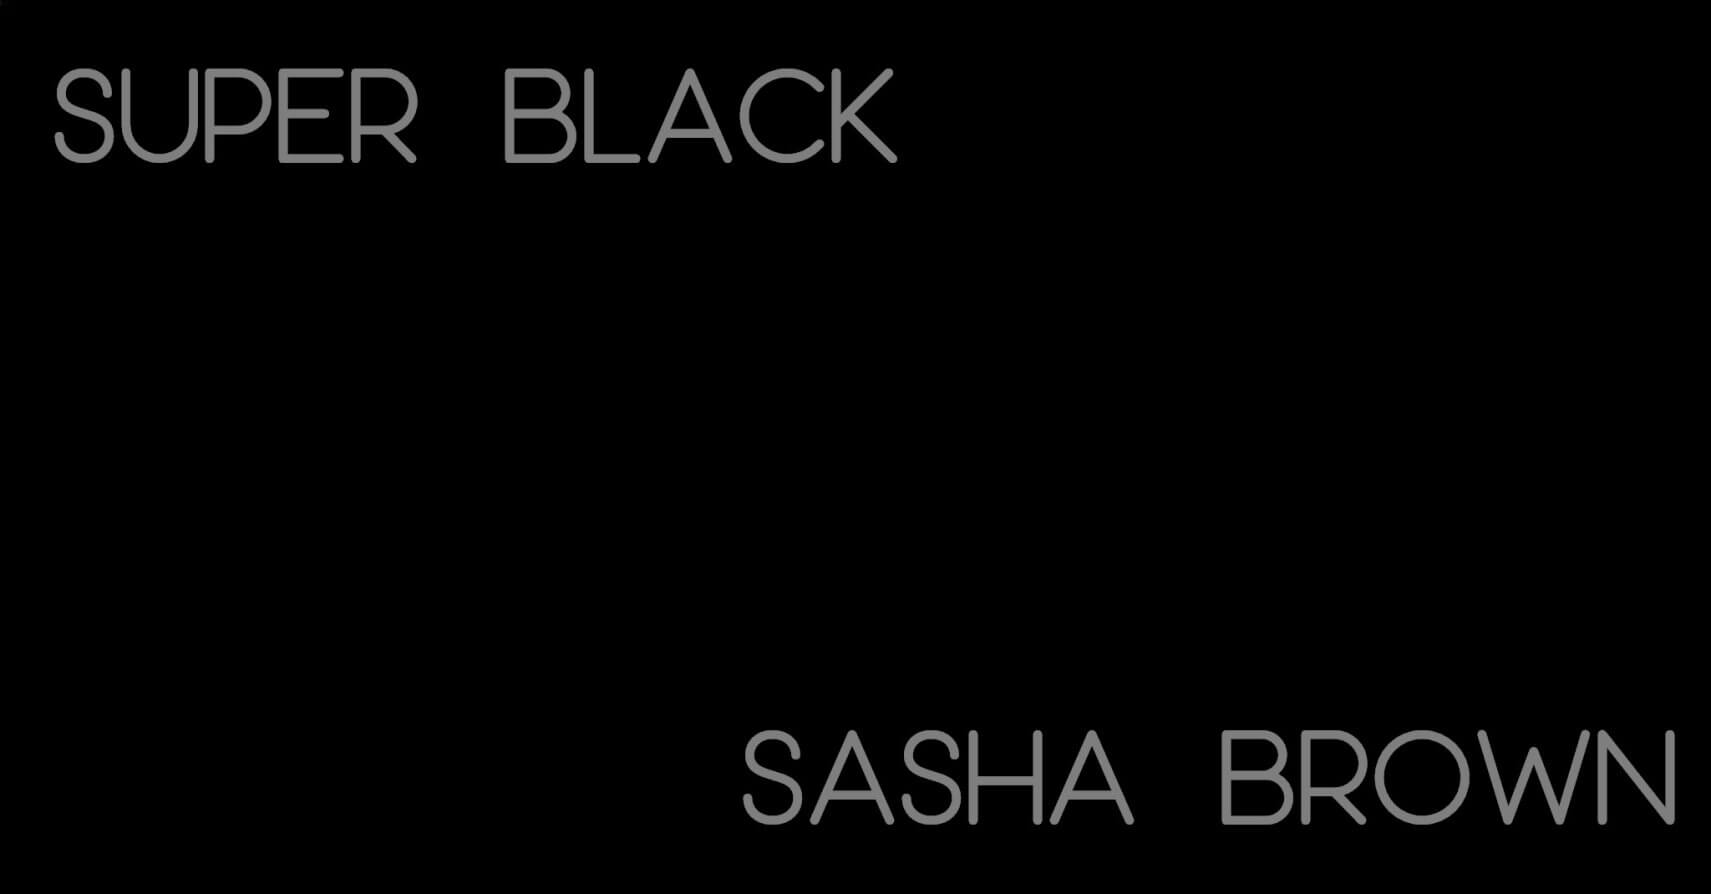 SUPER BLACK by Sasha Brown